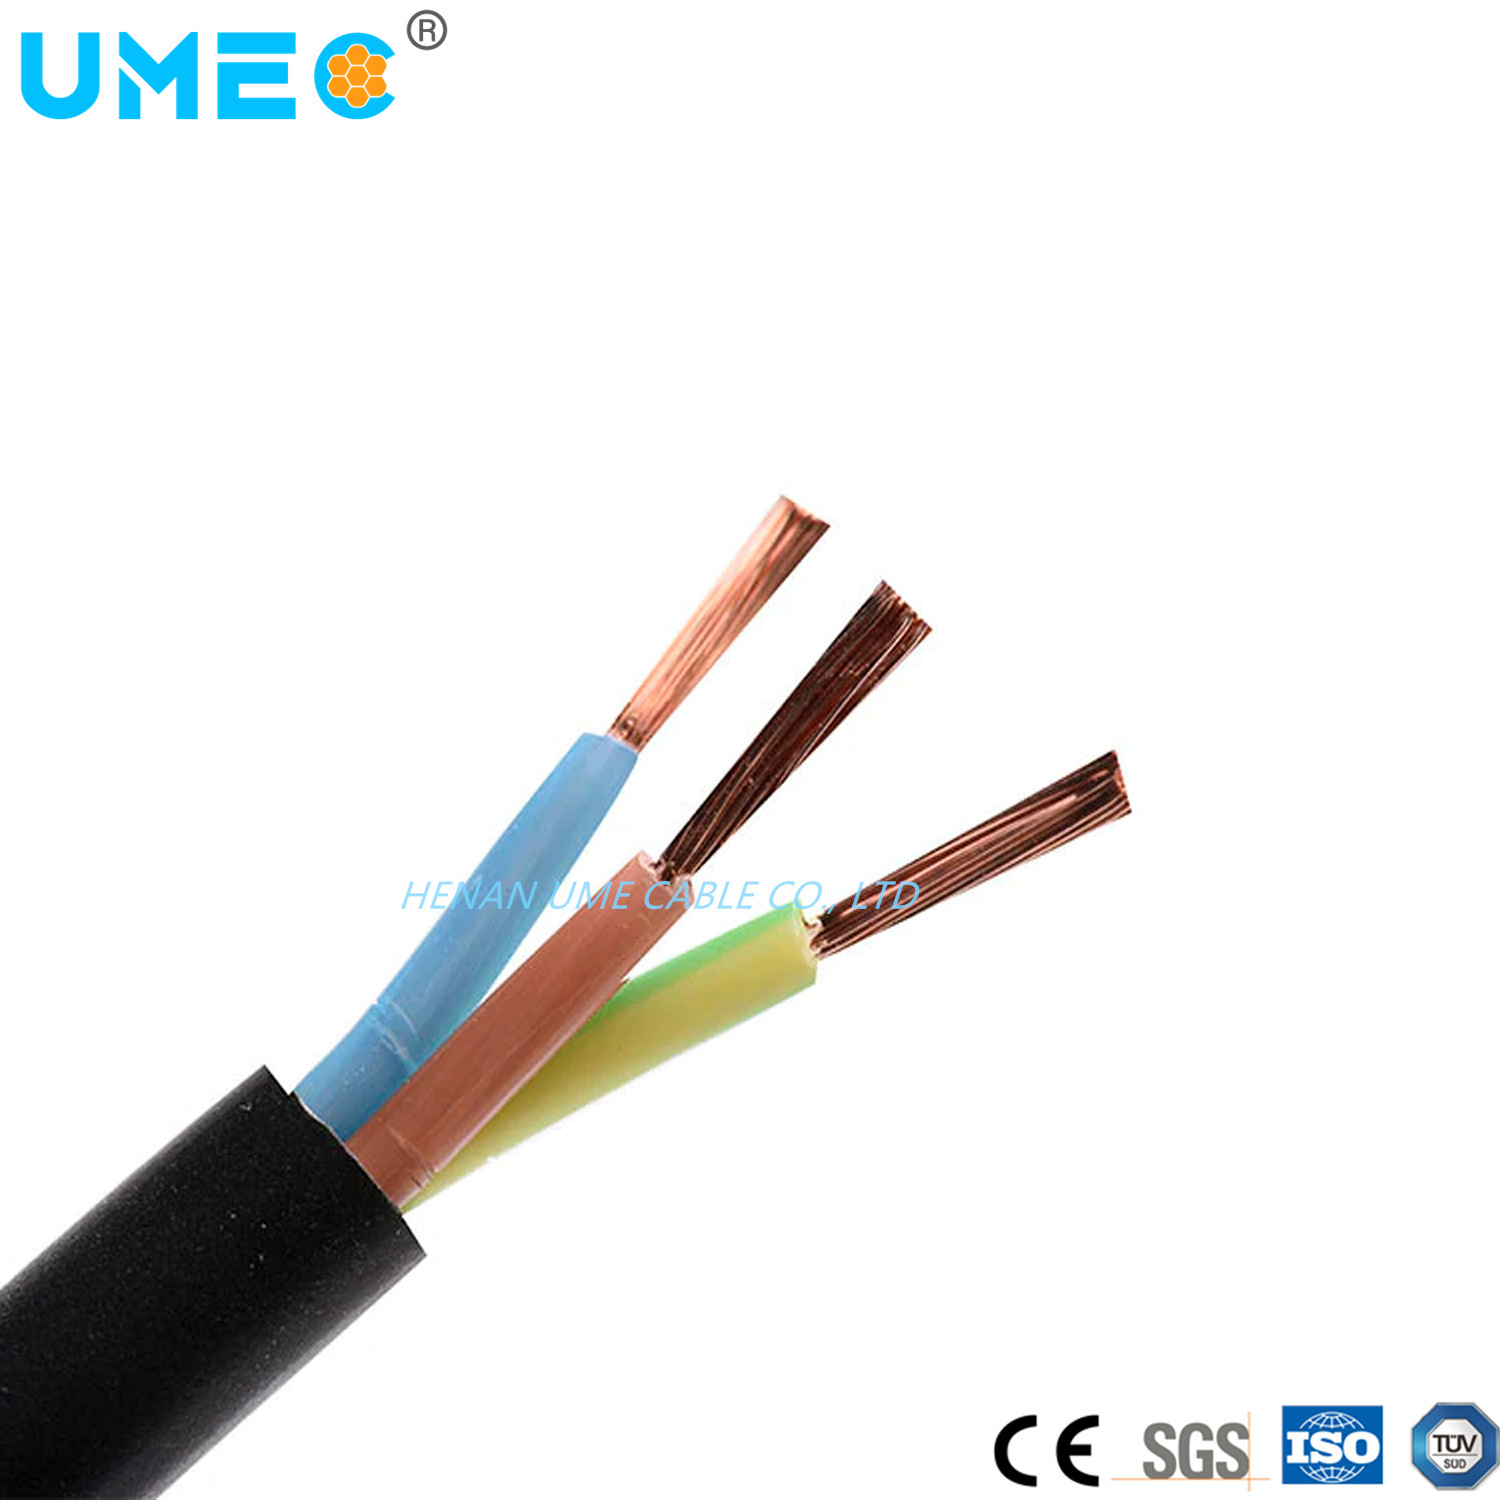 
                Bajo voltaje 600V Cable multiconductor Flexible Thhn Tsj aislamiento termoplástico de Nylon/Tsj Tsj Cable-N.
            